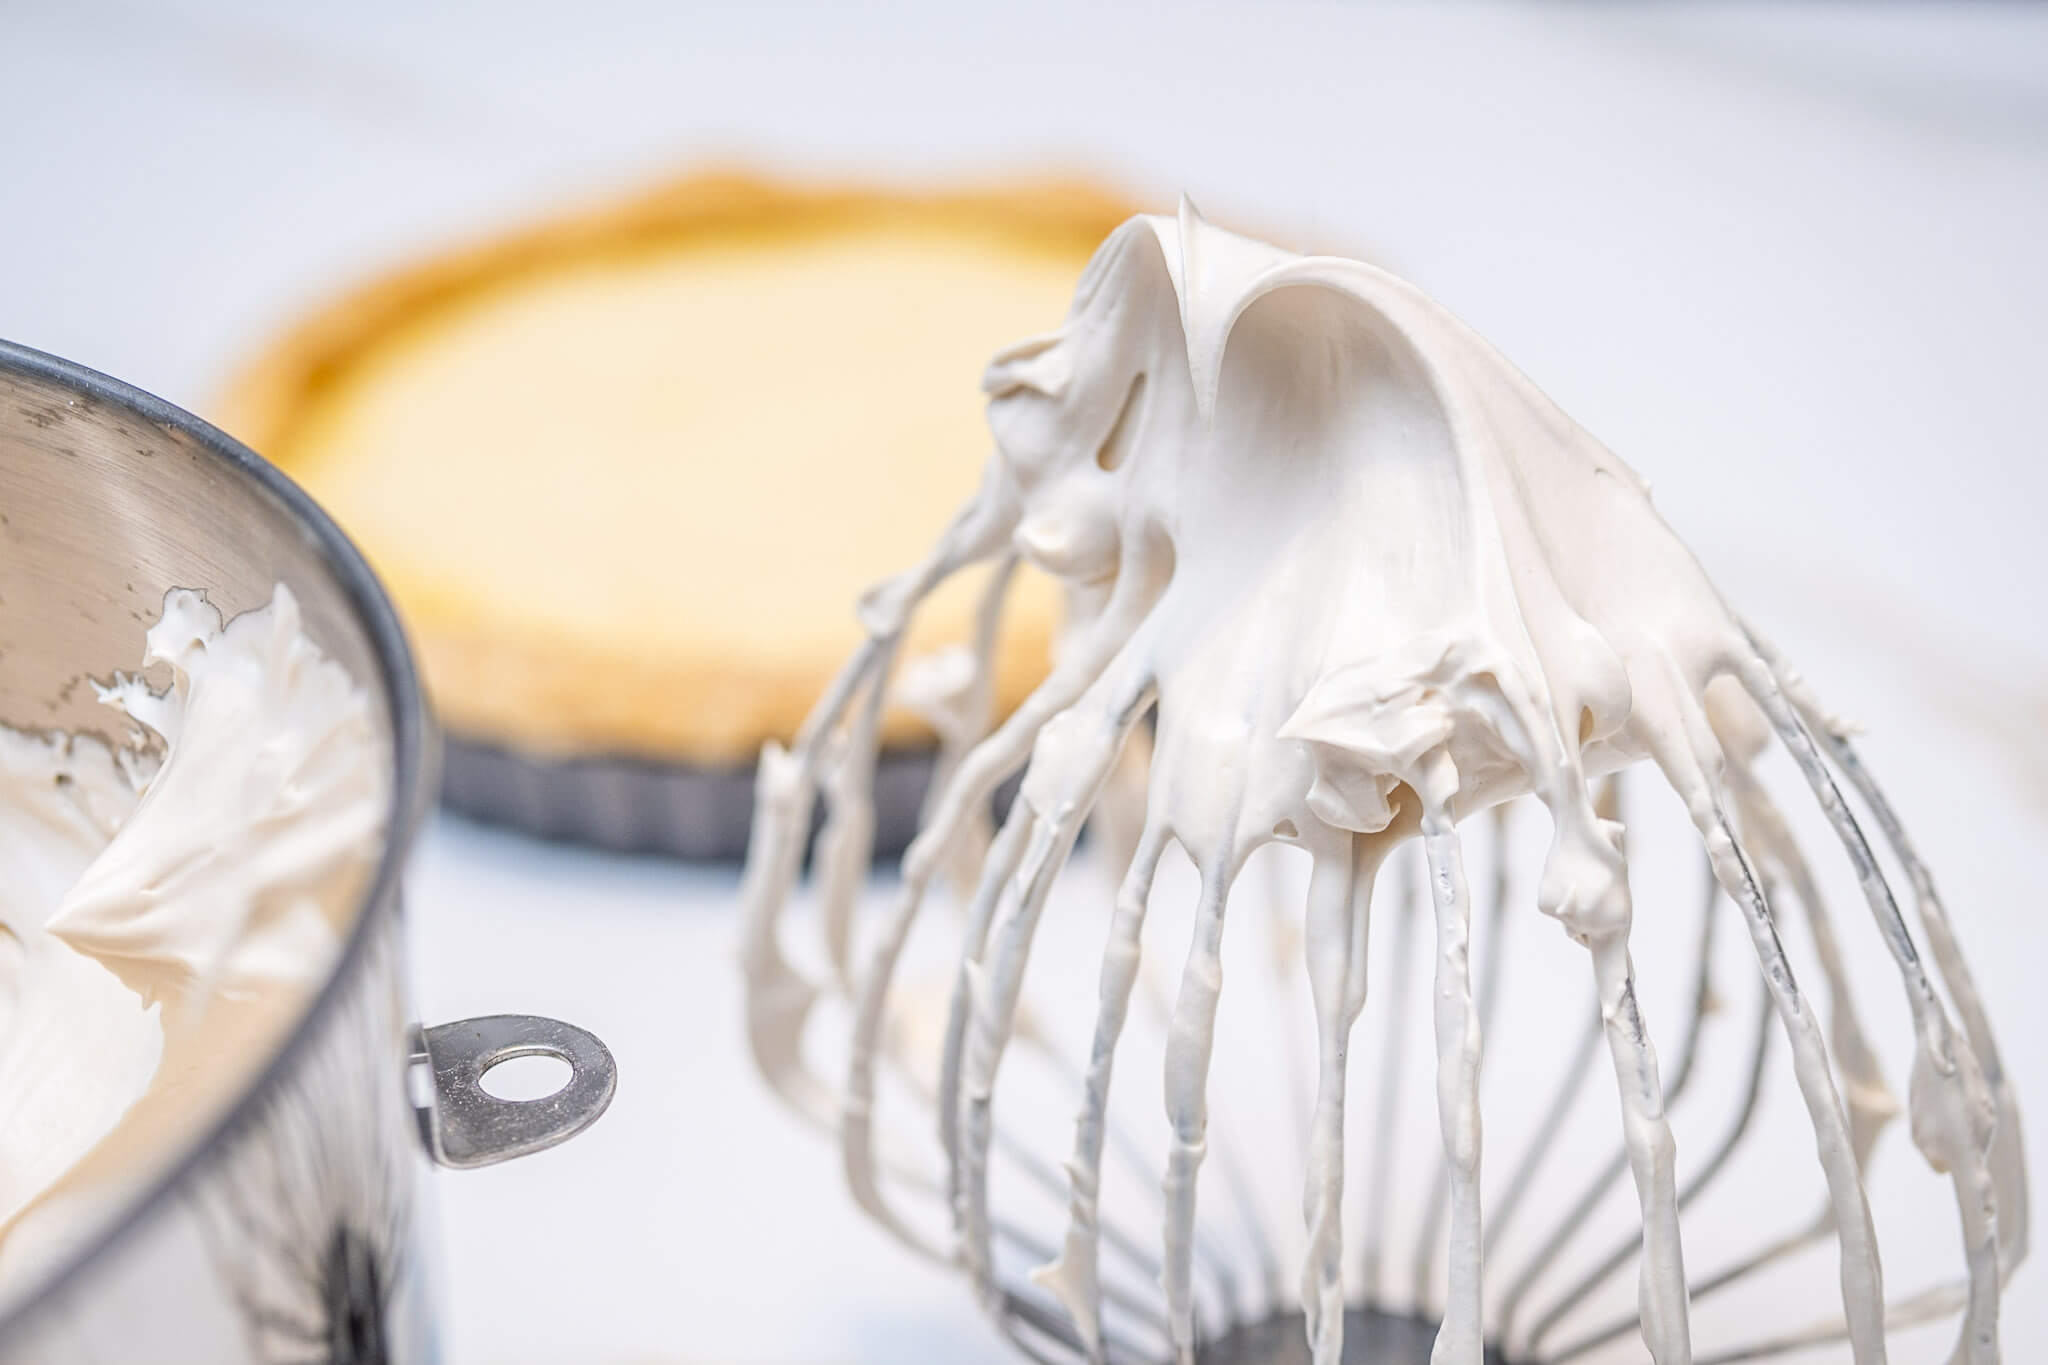 Wire whisk with Italian meringue for a lemon-lime meringue tart